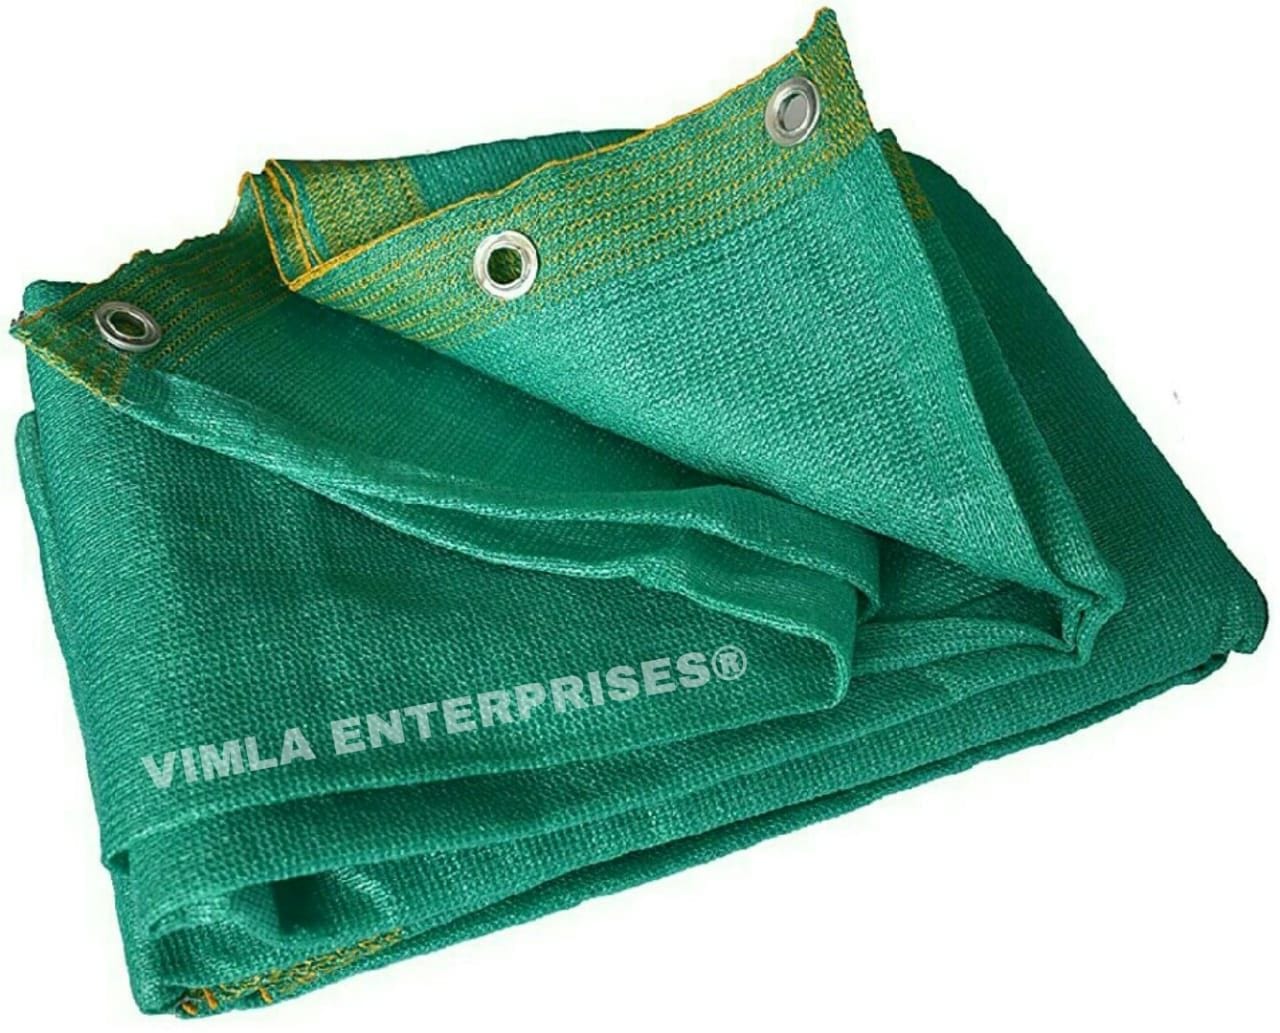 VIMLA ENTERPRISES 90% Green Shade Net With Eyelets (Width 5 FT/ 1.5 M)